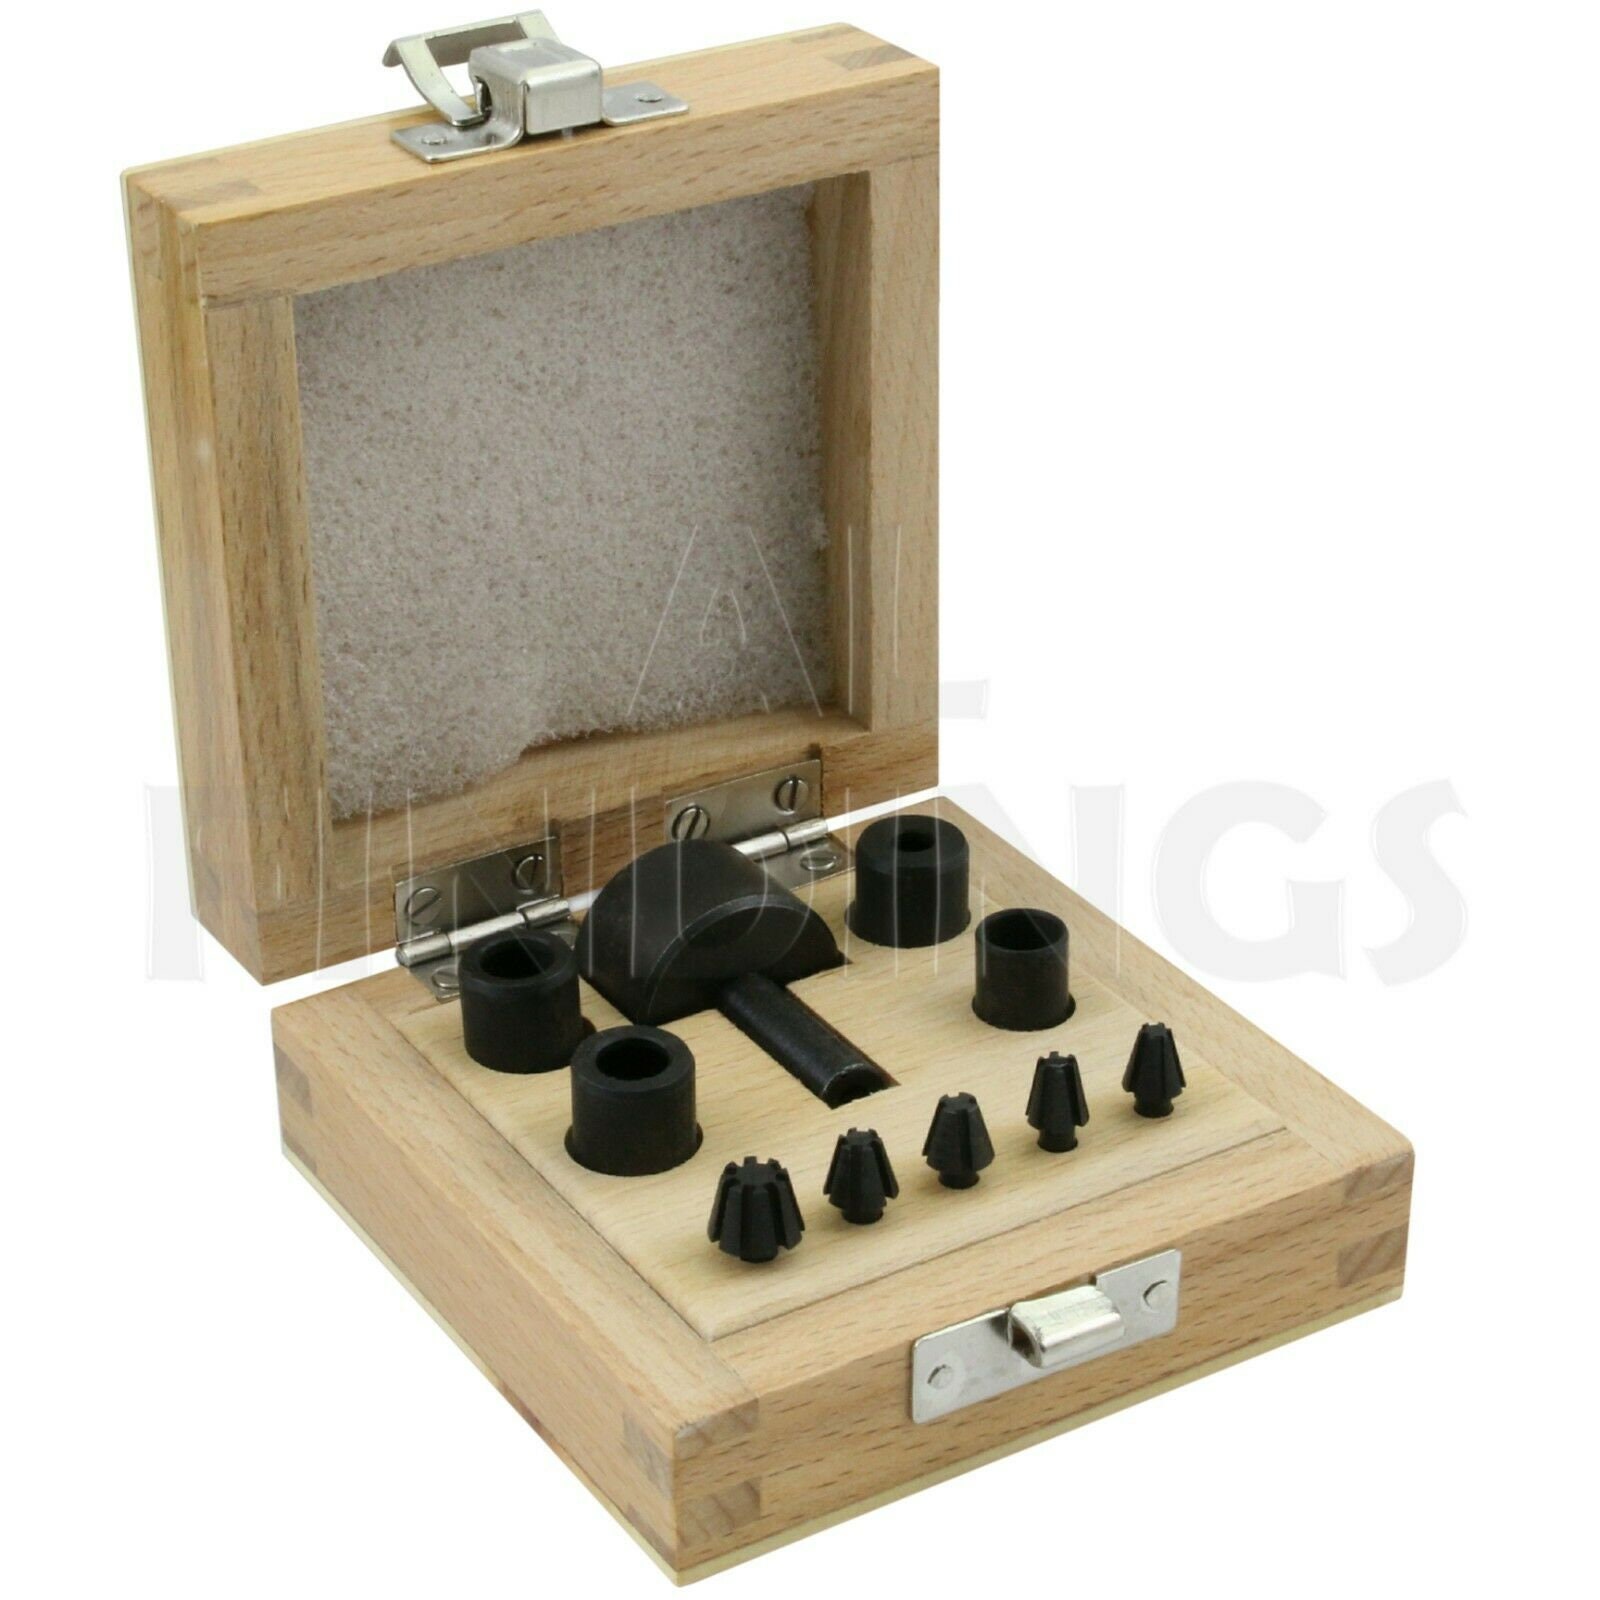 Stone Setting Tool Kit, Jewelry making kit